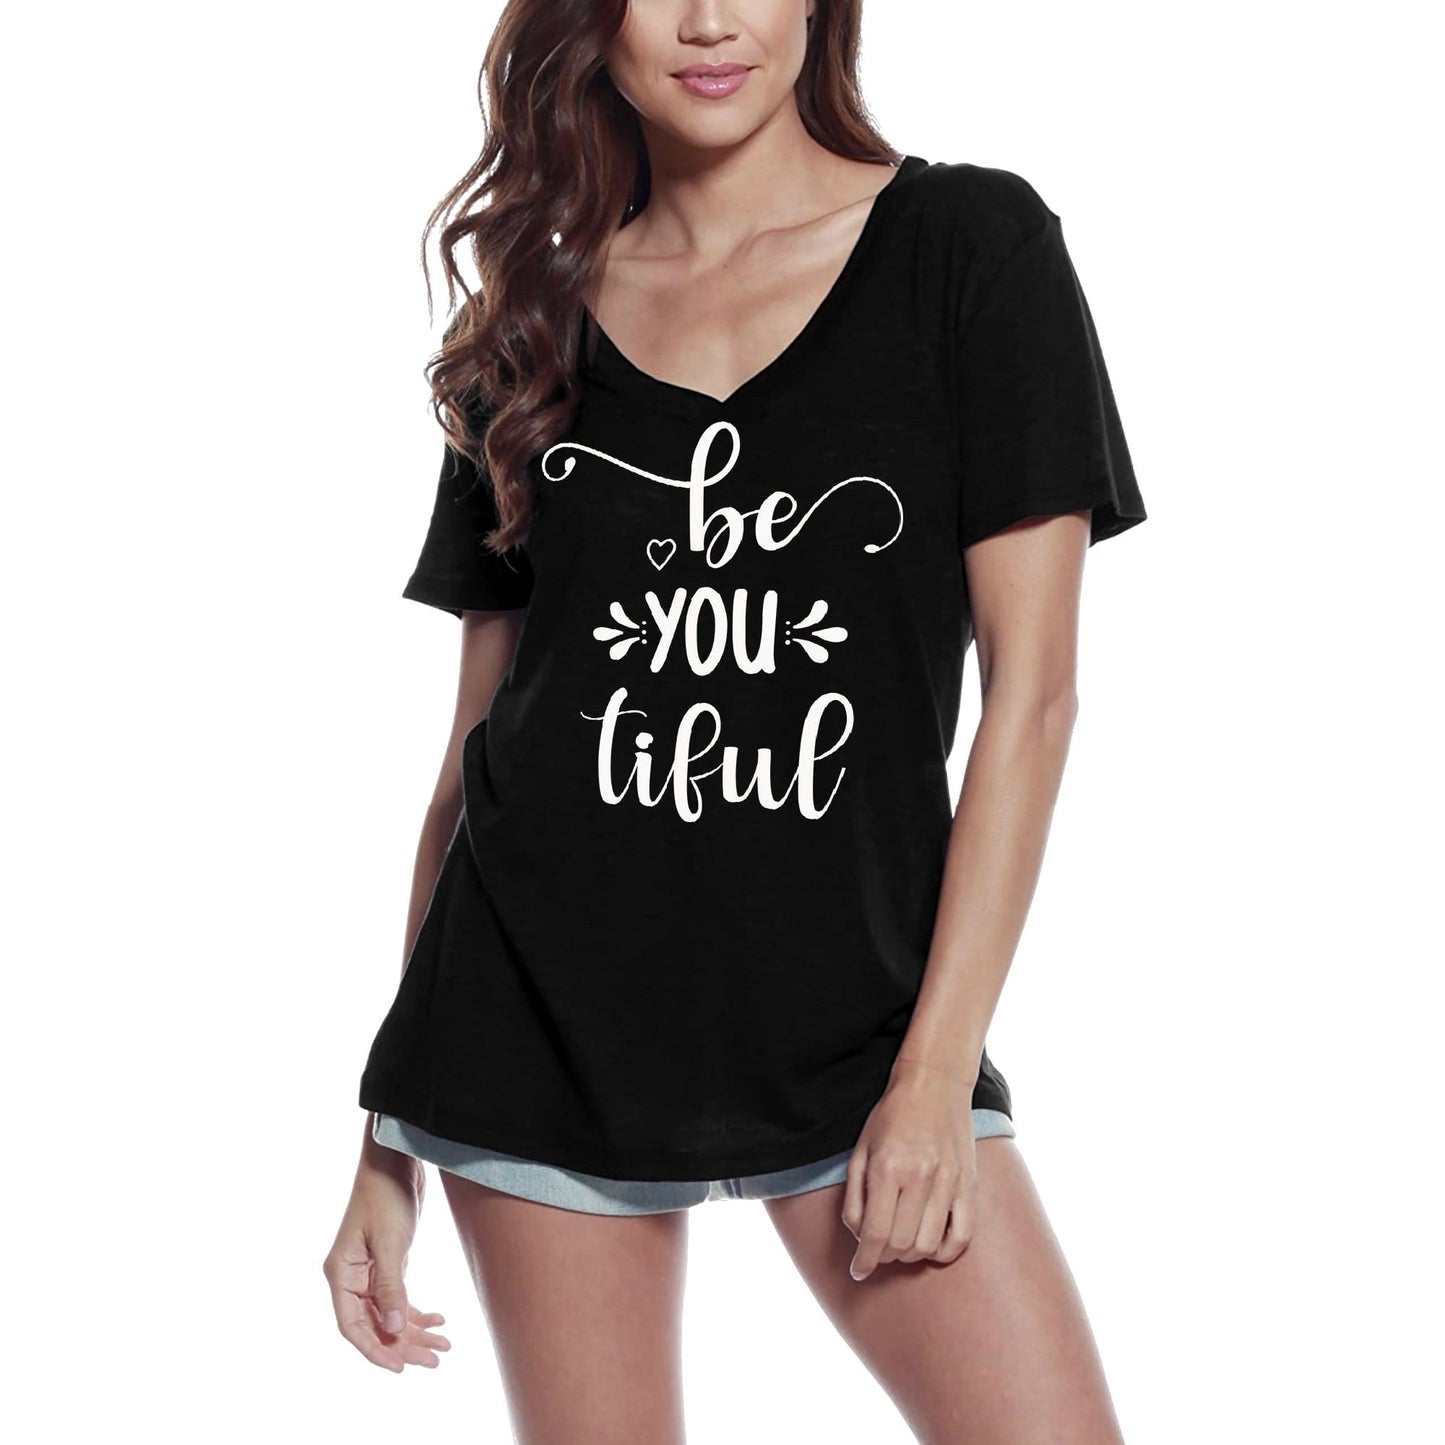 ULTRABASIC Women's V-Neck T-Shirt Beautiful - Funny Humor Short Sleeve Tee Shirt Gift Tops